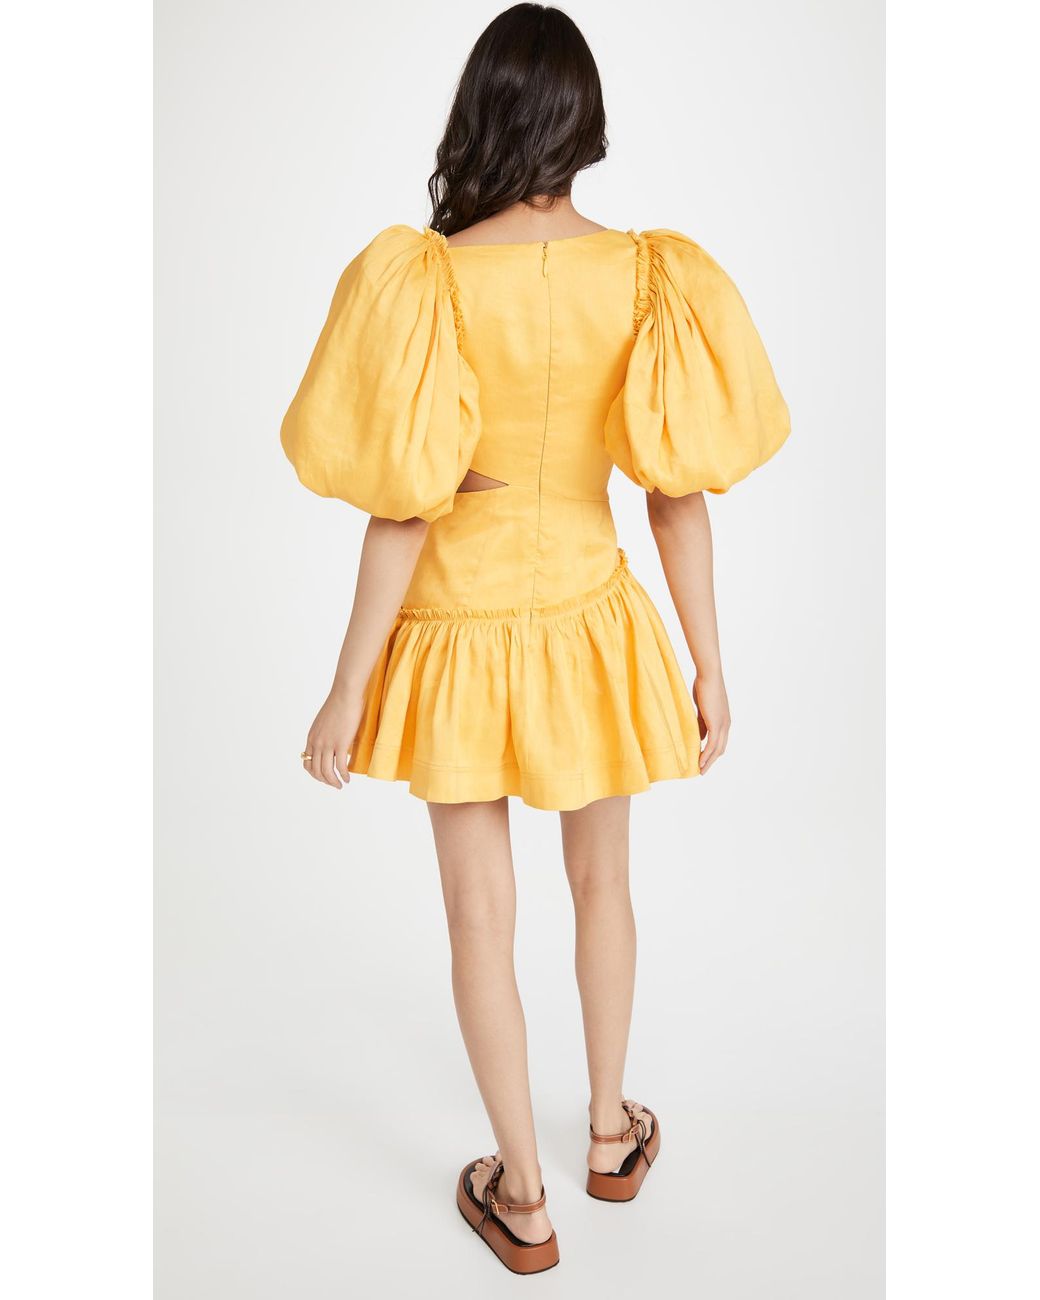 Aje. Chateau Mini Dress in Yellow | Lyst